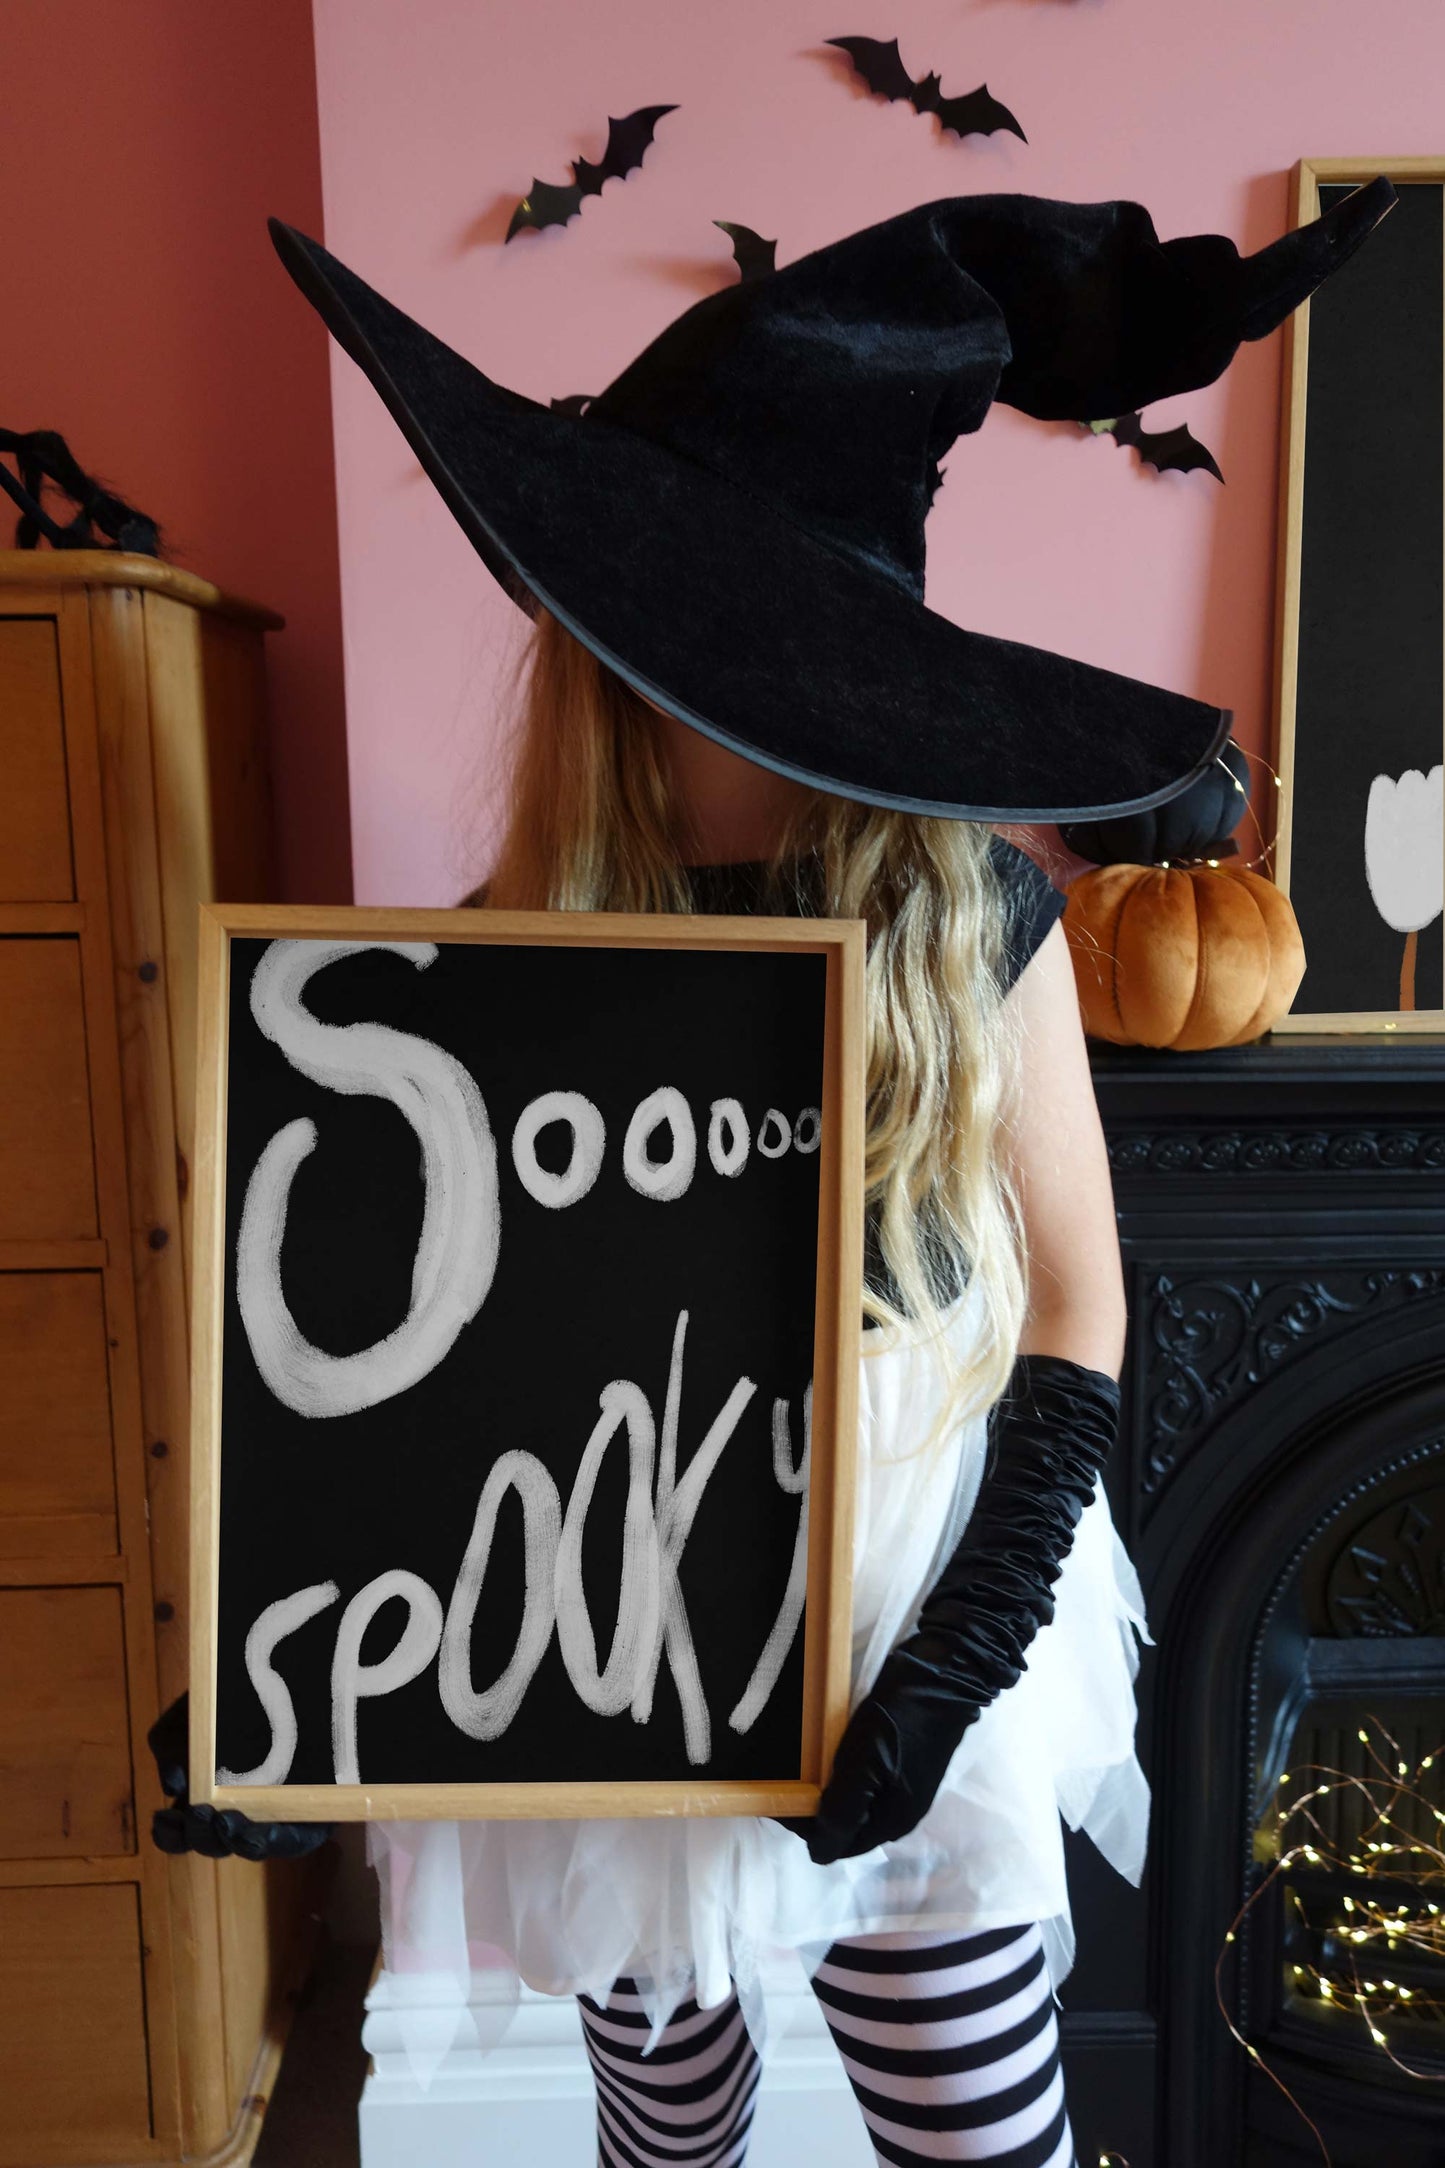 Soooo Spooky - Halloween Special Fine Art Print